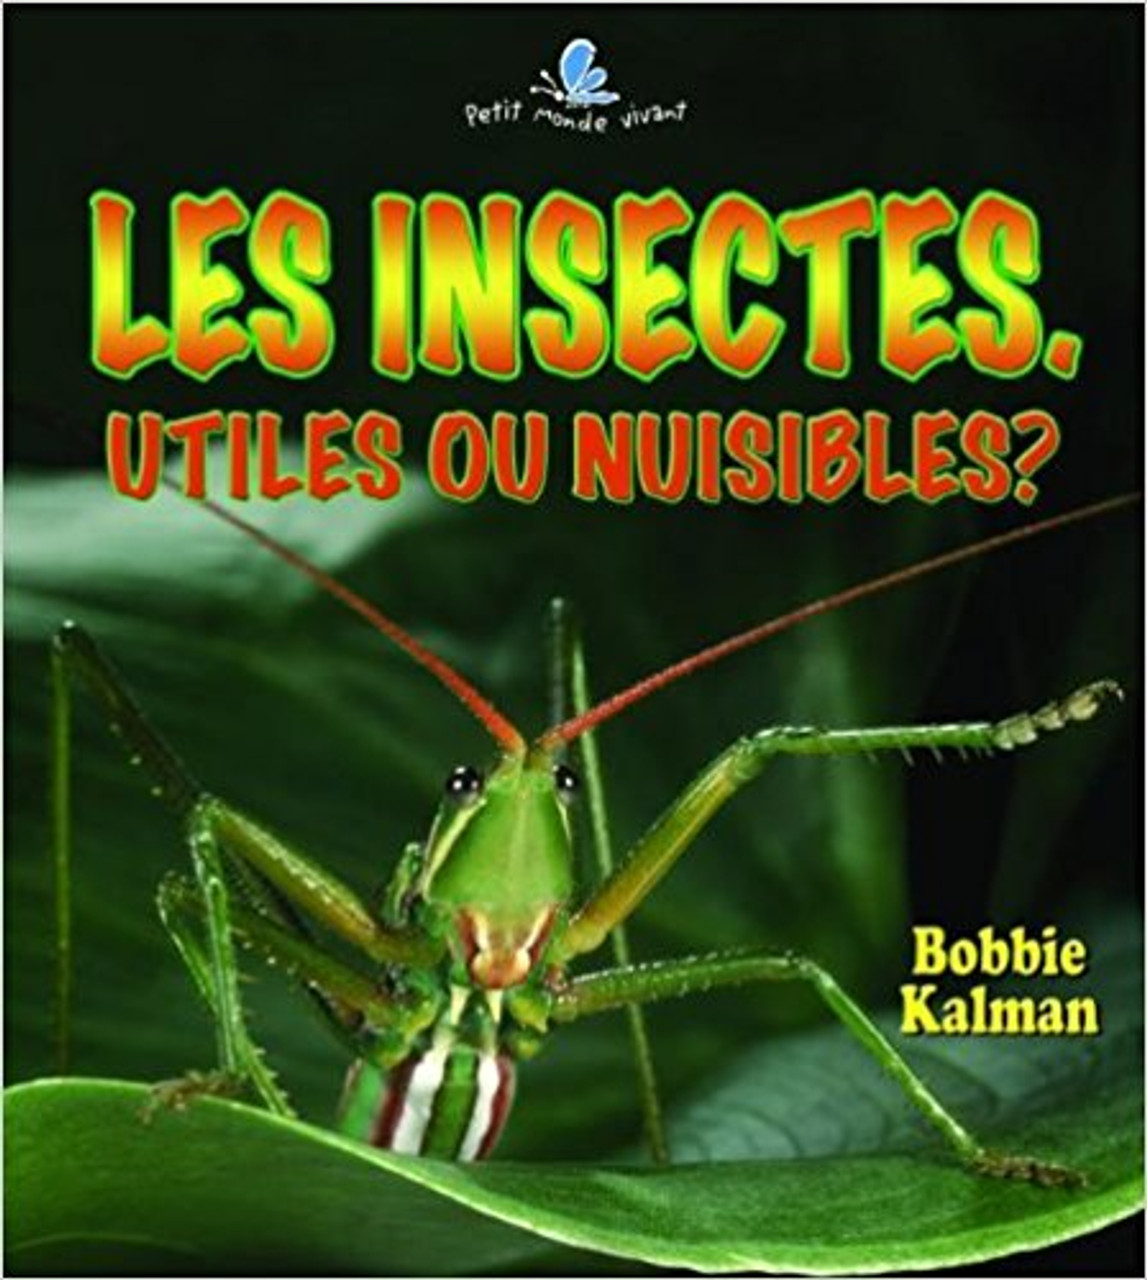 Les Insectes: Utiles ou Nuisibles? by Molly Aloian